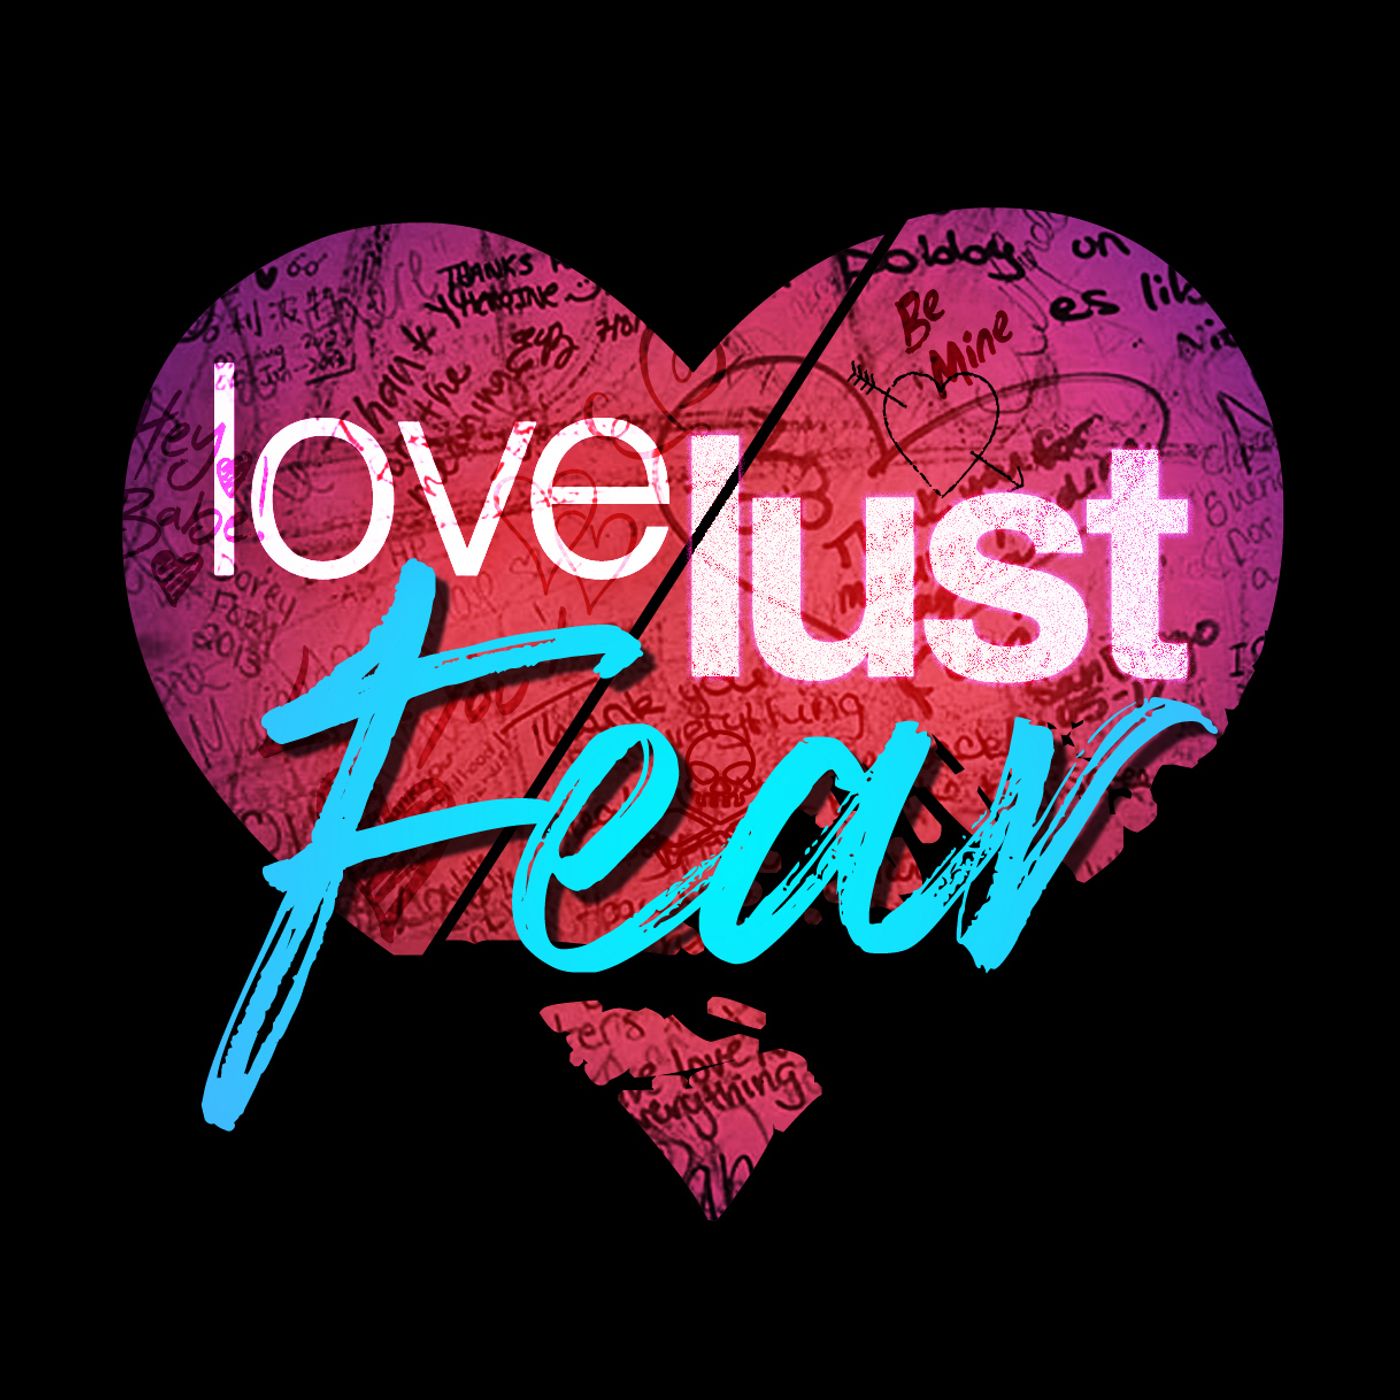 8: lovelustfear | laura | true love always